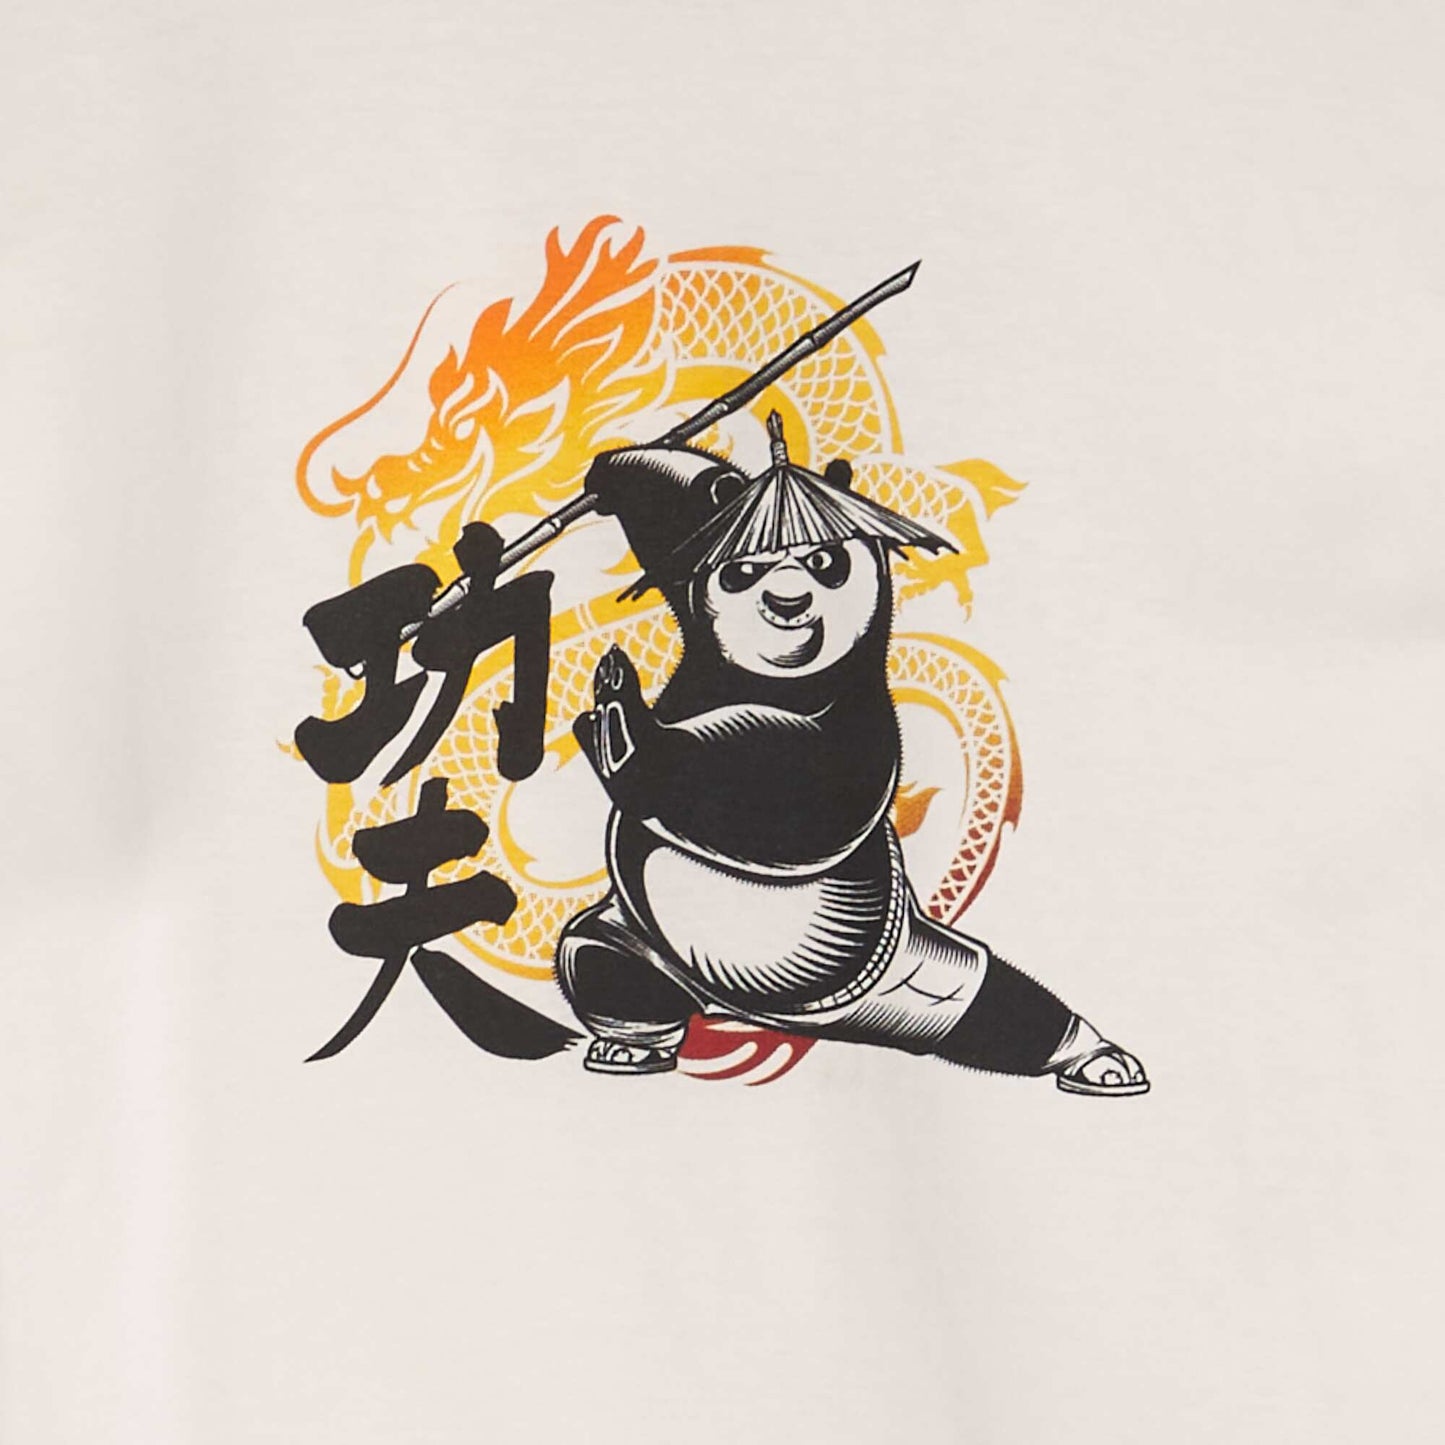 T-shirt Kung-Fu Panda' Blanc